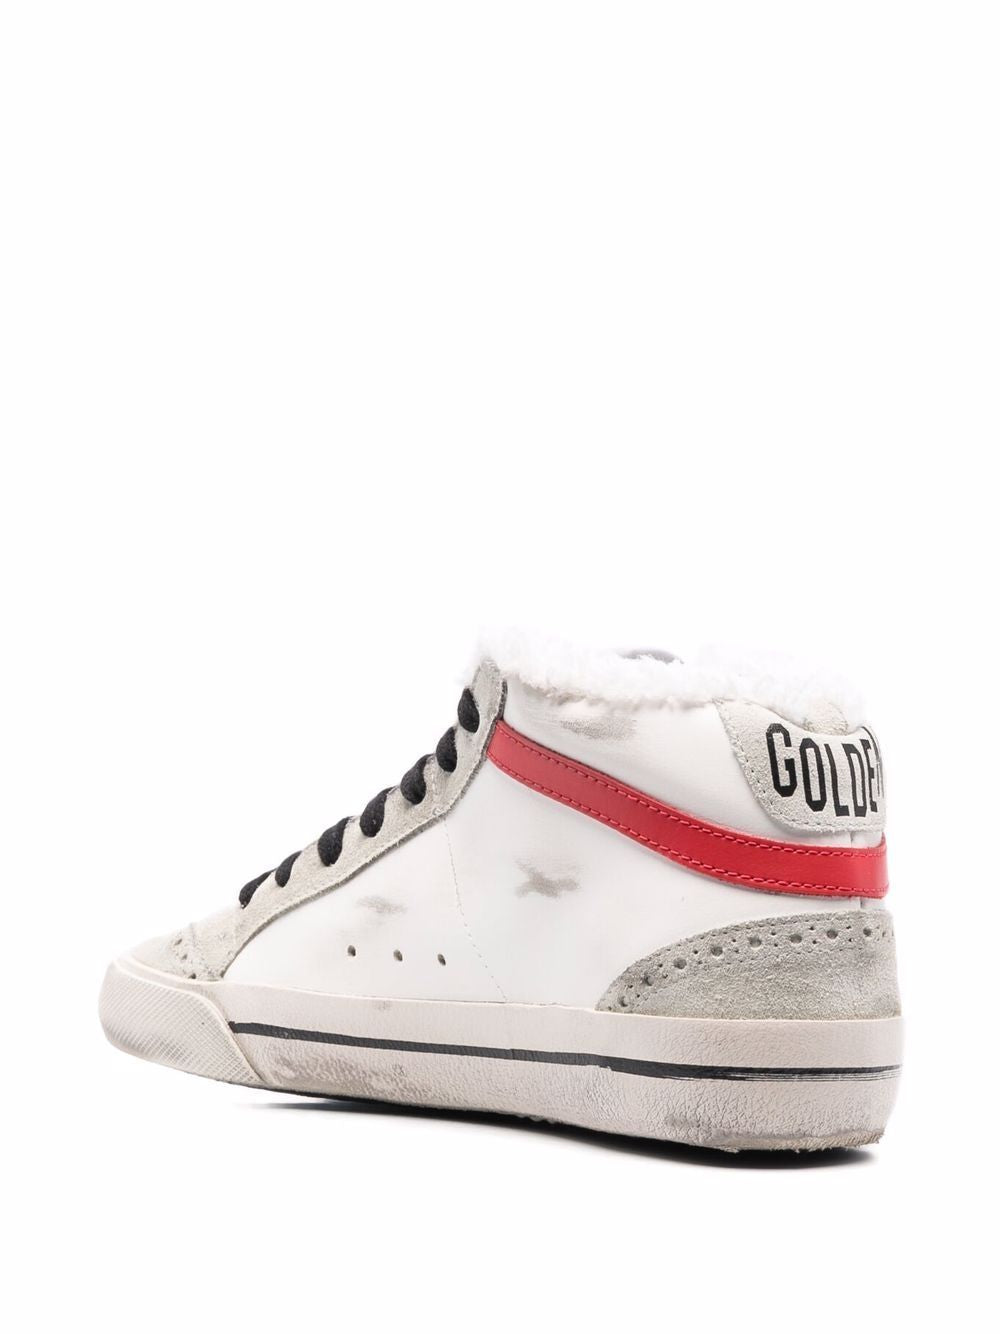 GOLDEN GOOSE White Mid Star Sneaker for Women - SS22 Collection